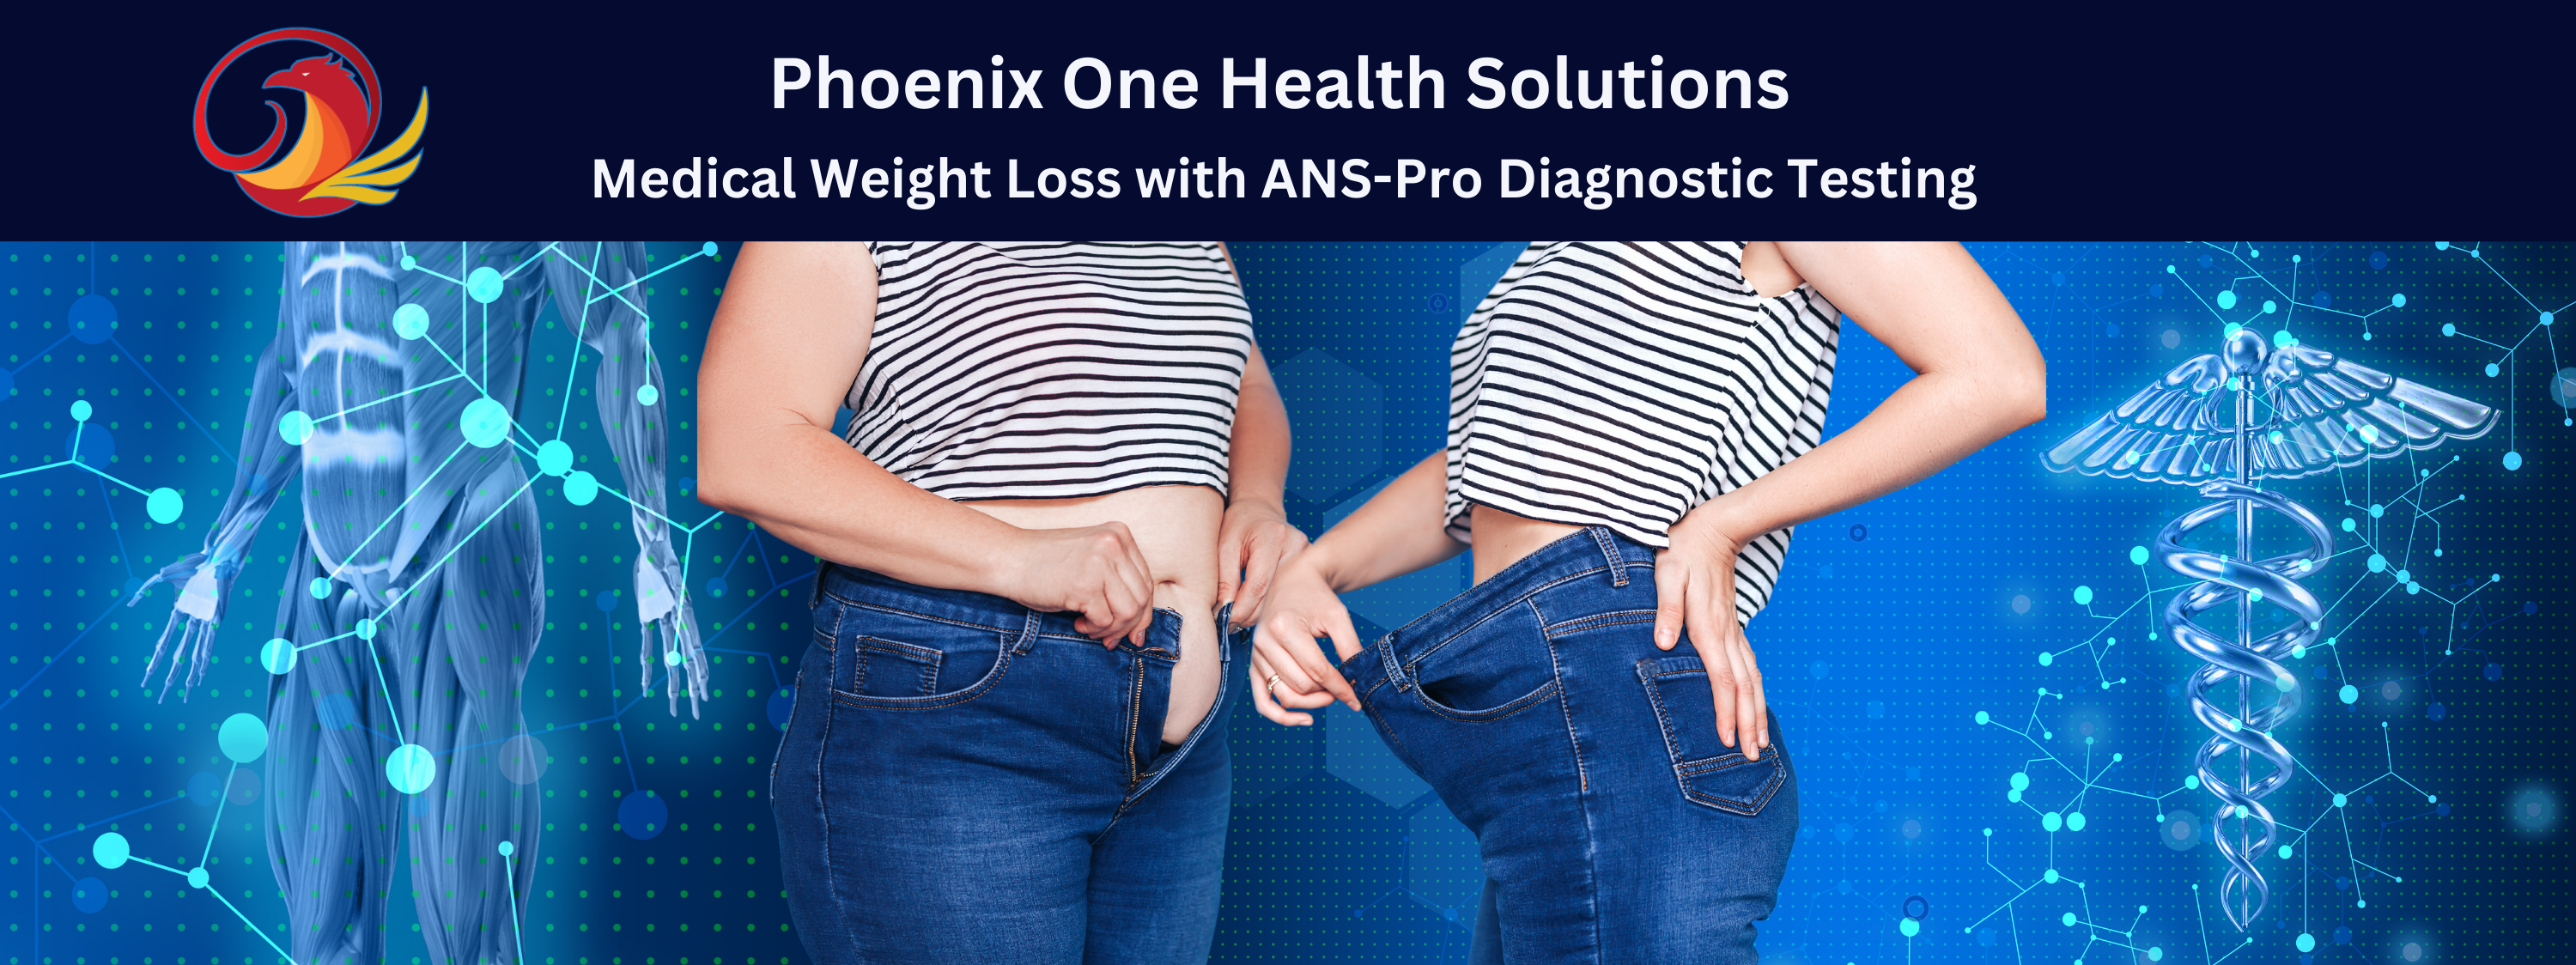 Phoenix One Health Solutions